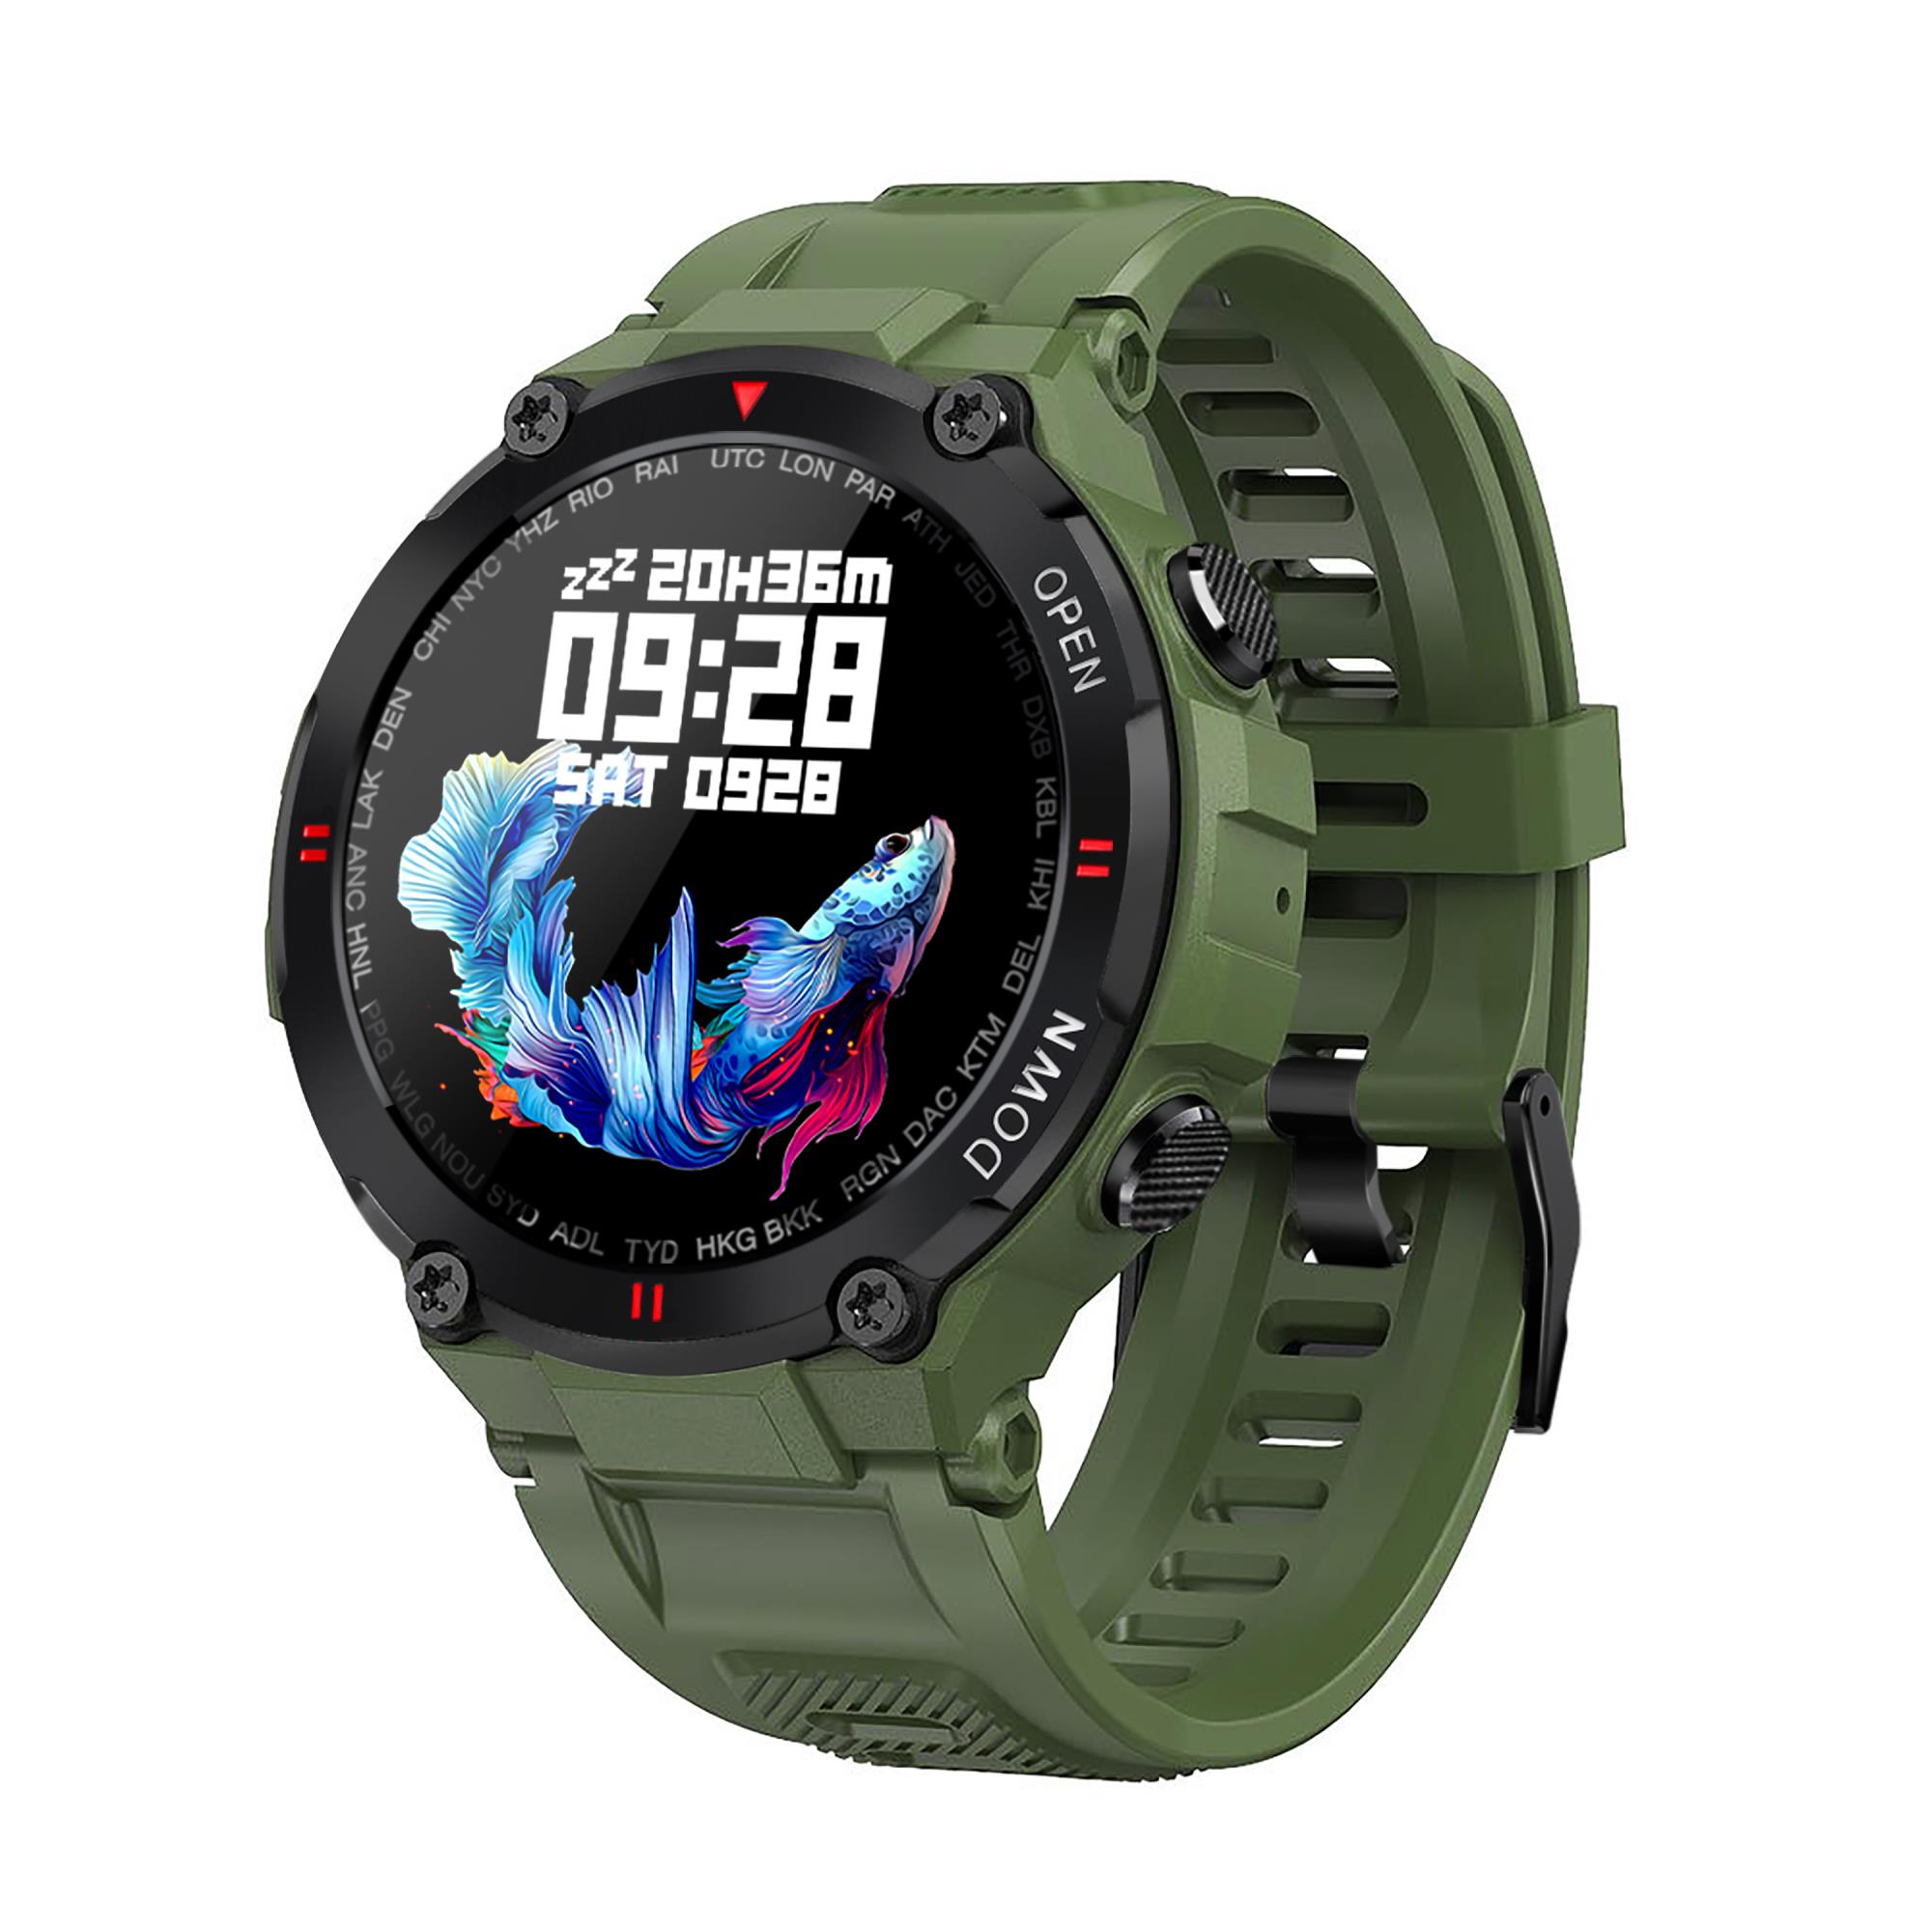 Smartwatch cassa plastica 50 mm - PAUL EDWARD